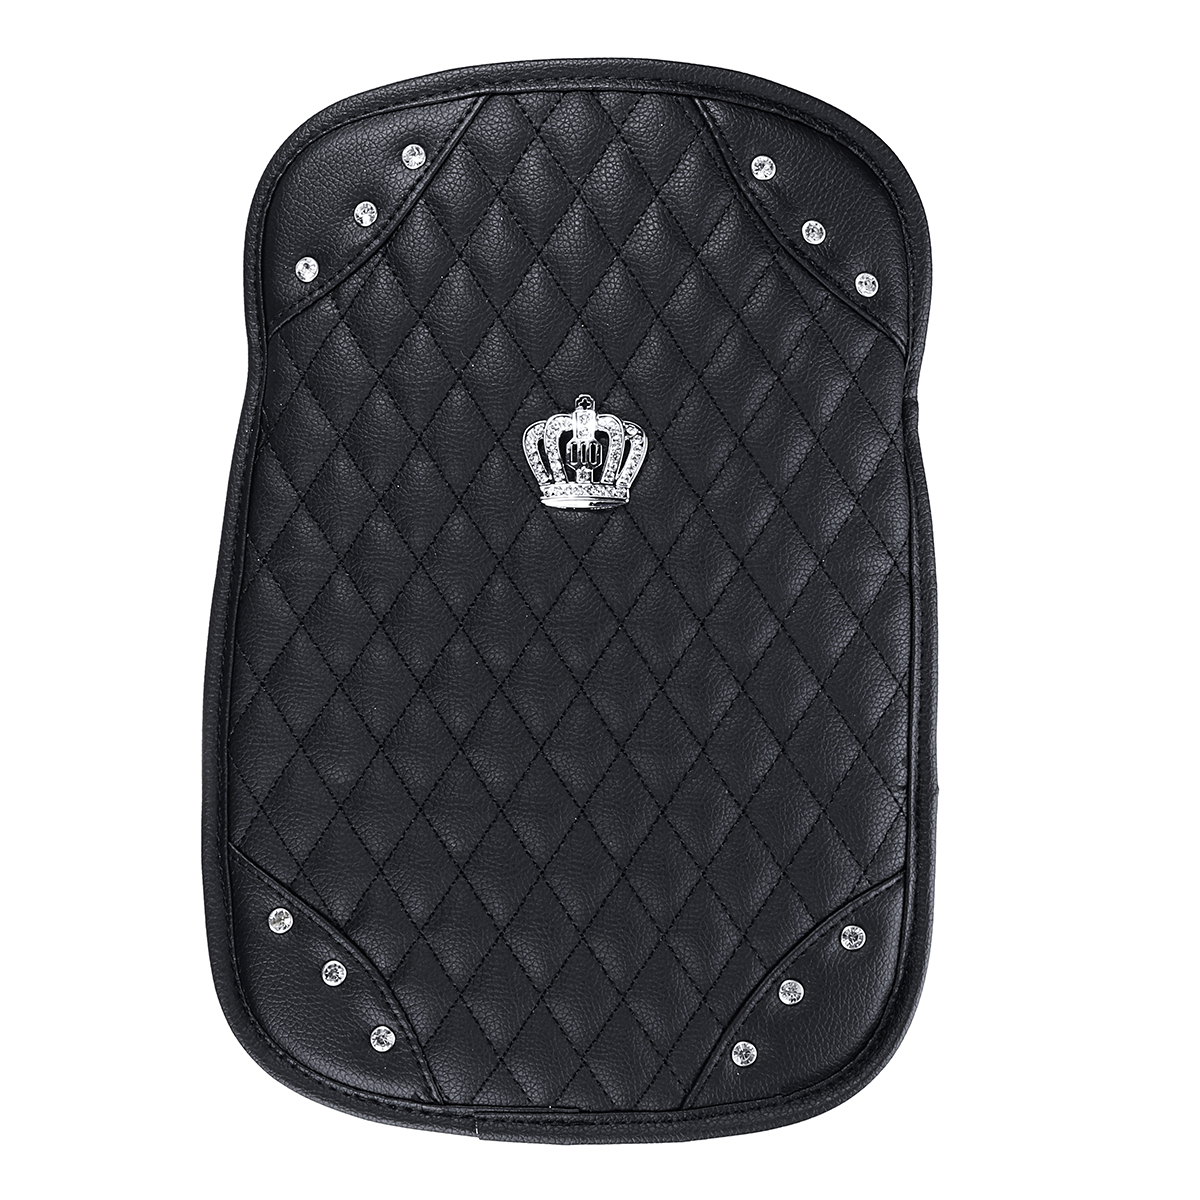 

Car Center Console Arm Rest Pad Cover Protector Cushion Crown Diamond Crystal